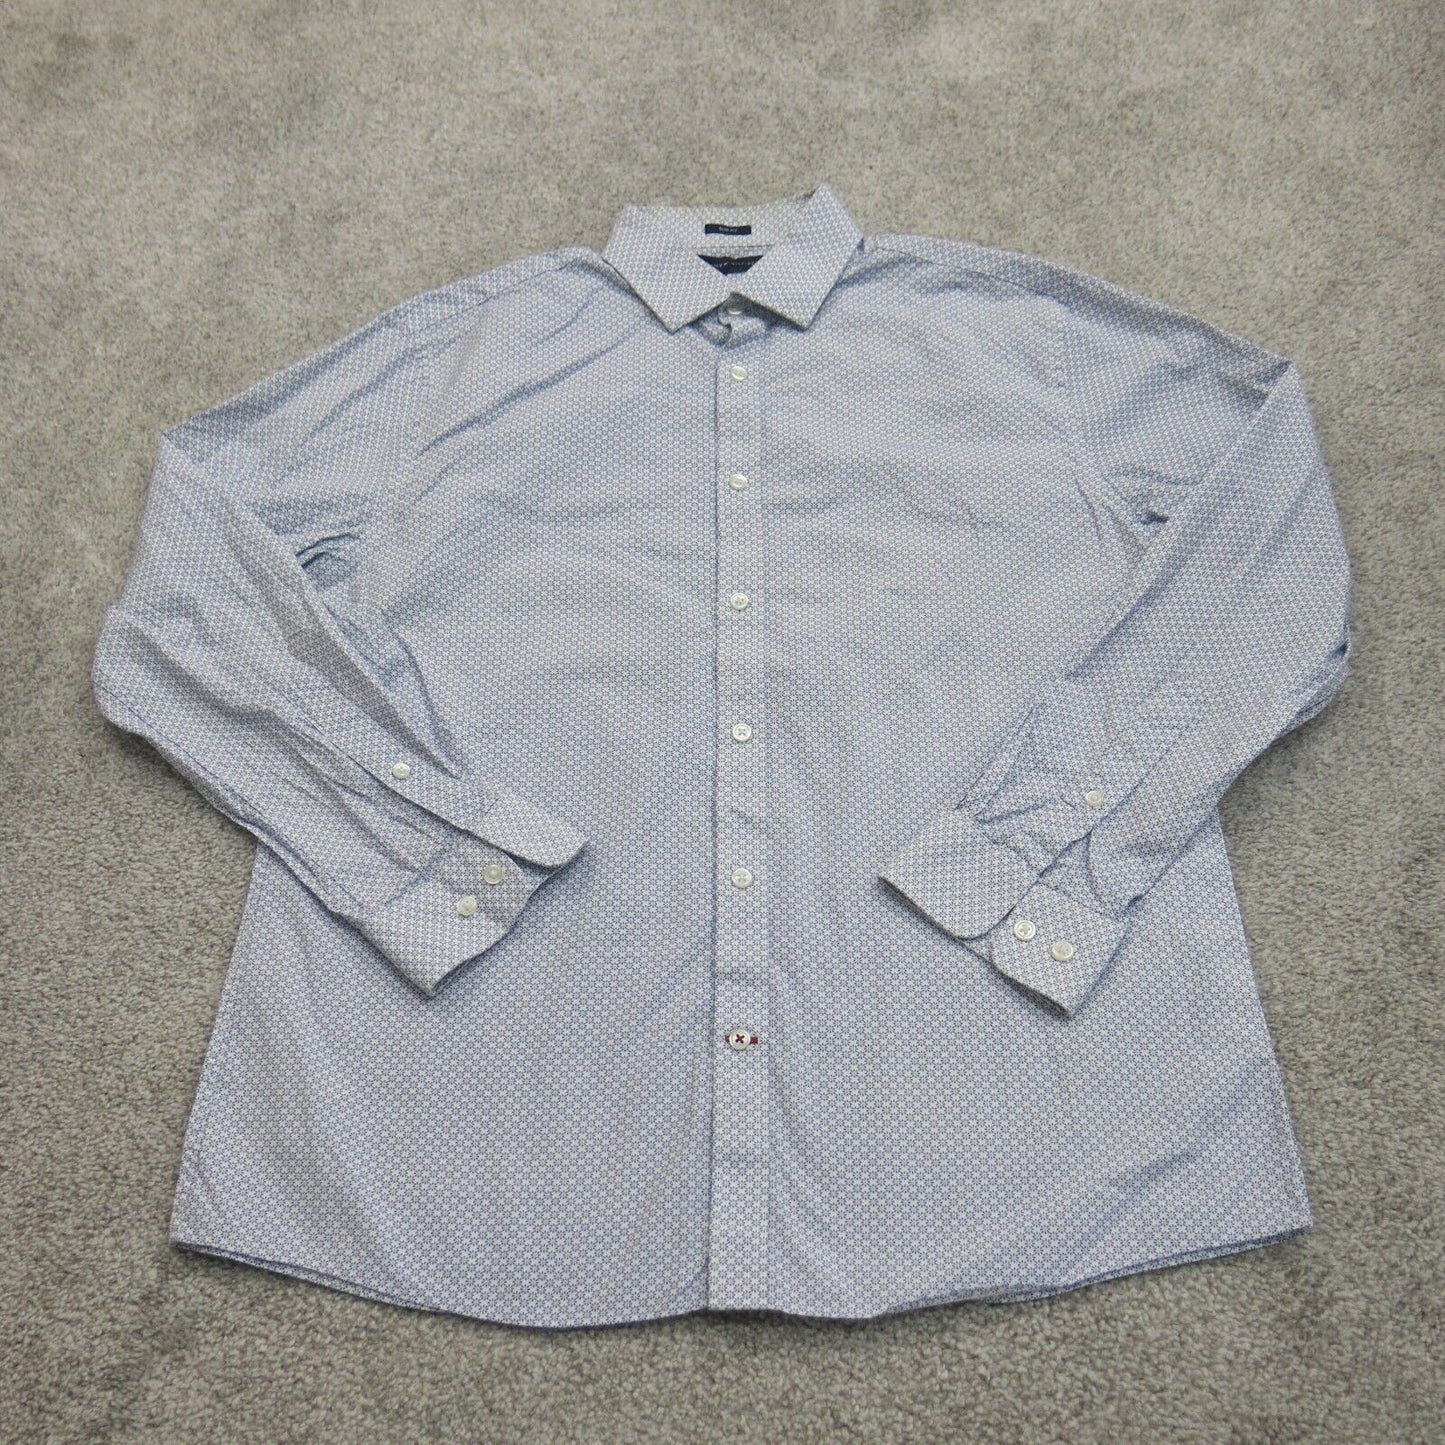 Tommy Hilfiger Mens Button Up Polka Dot Shirt Collard White Blue Size L 16 32/33